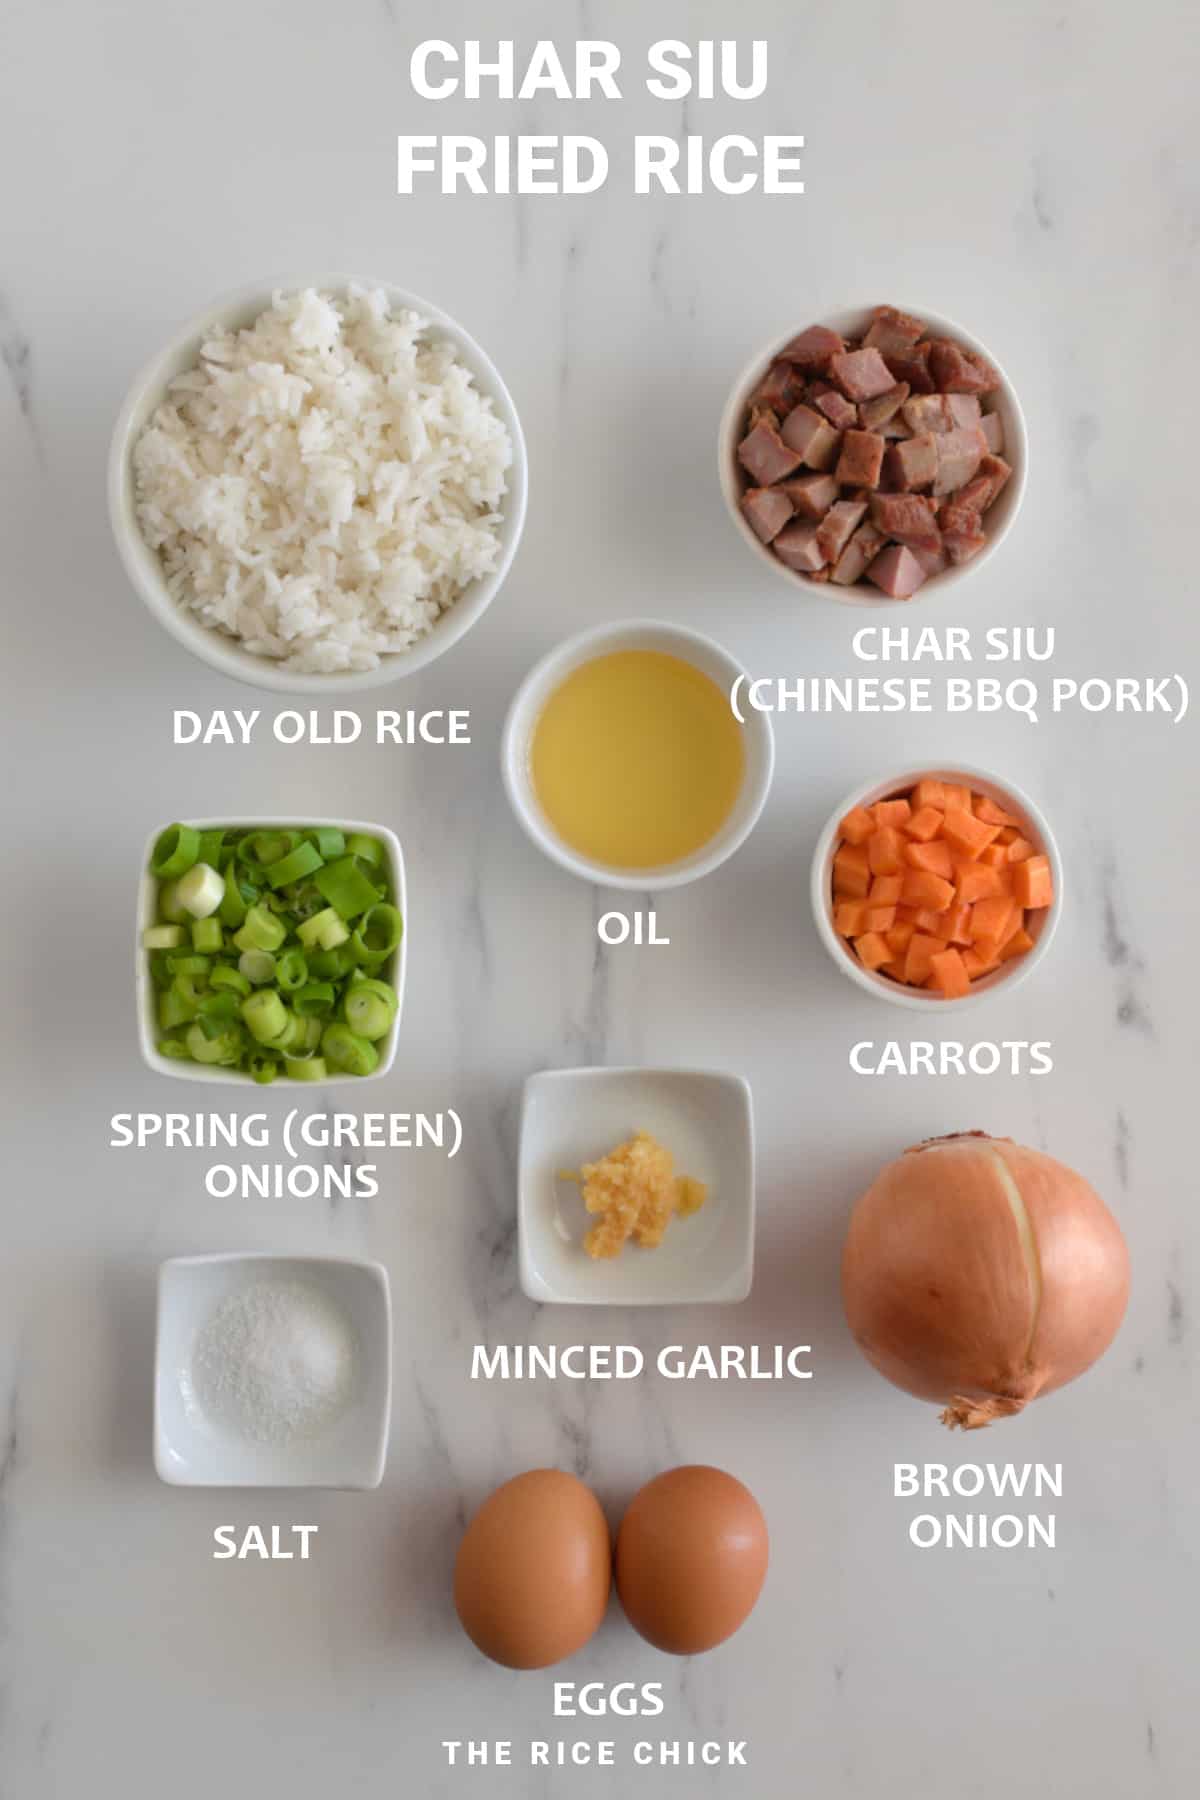 Char siu fried rice ingredients.